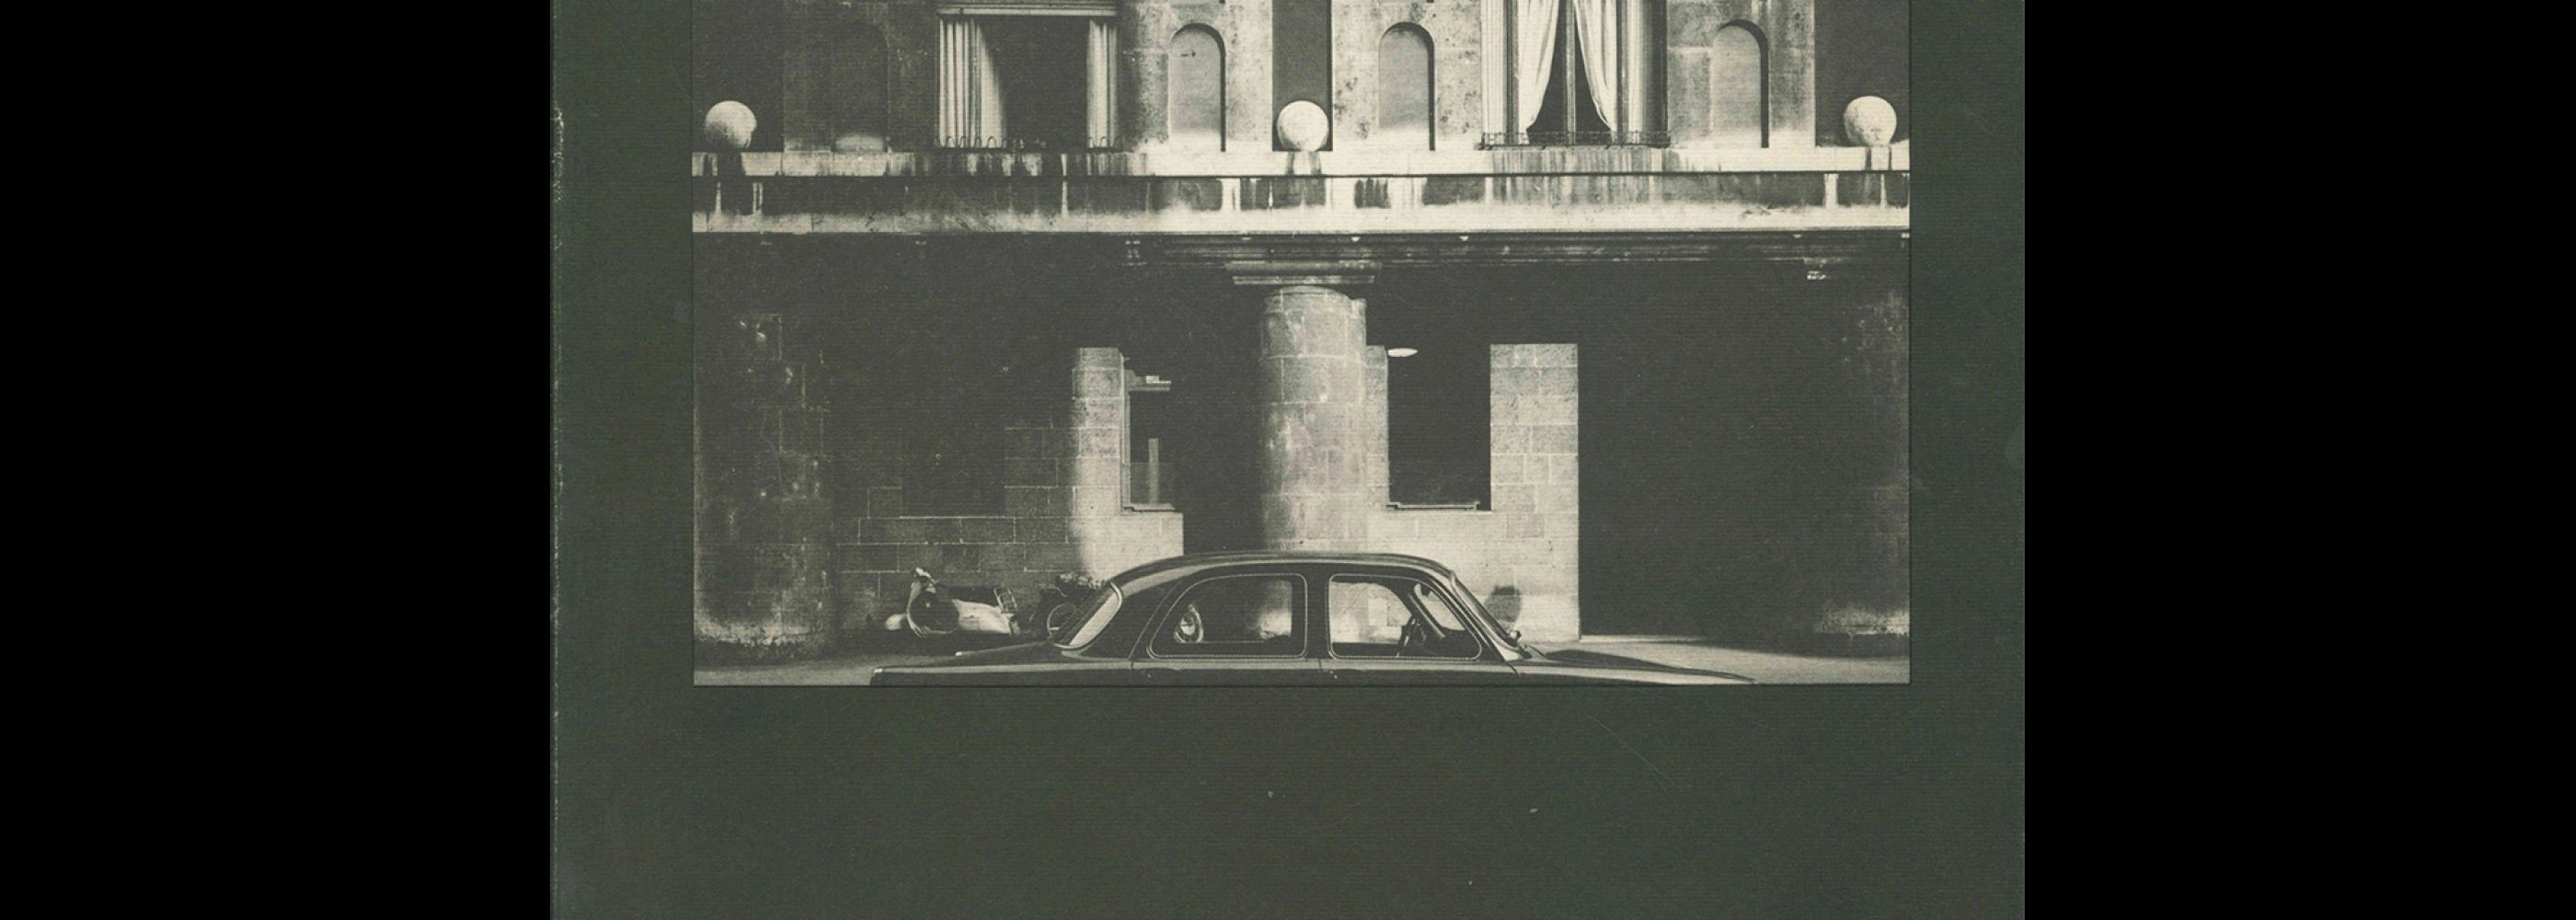 Rassegna 20, Fotografie Di Architettura / Photographs of Architecture, 1984